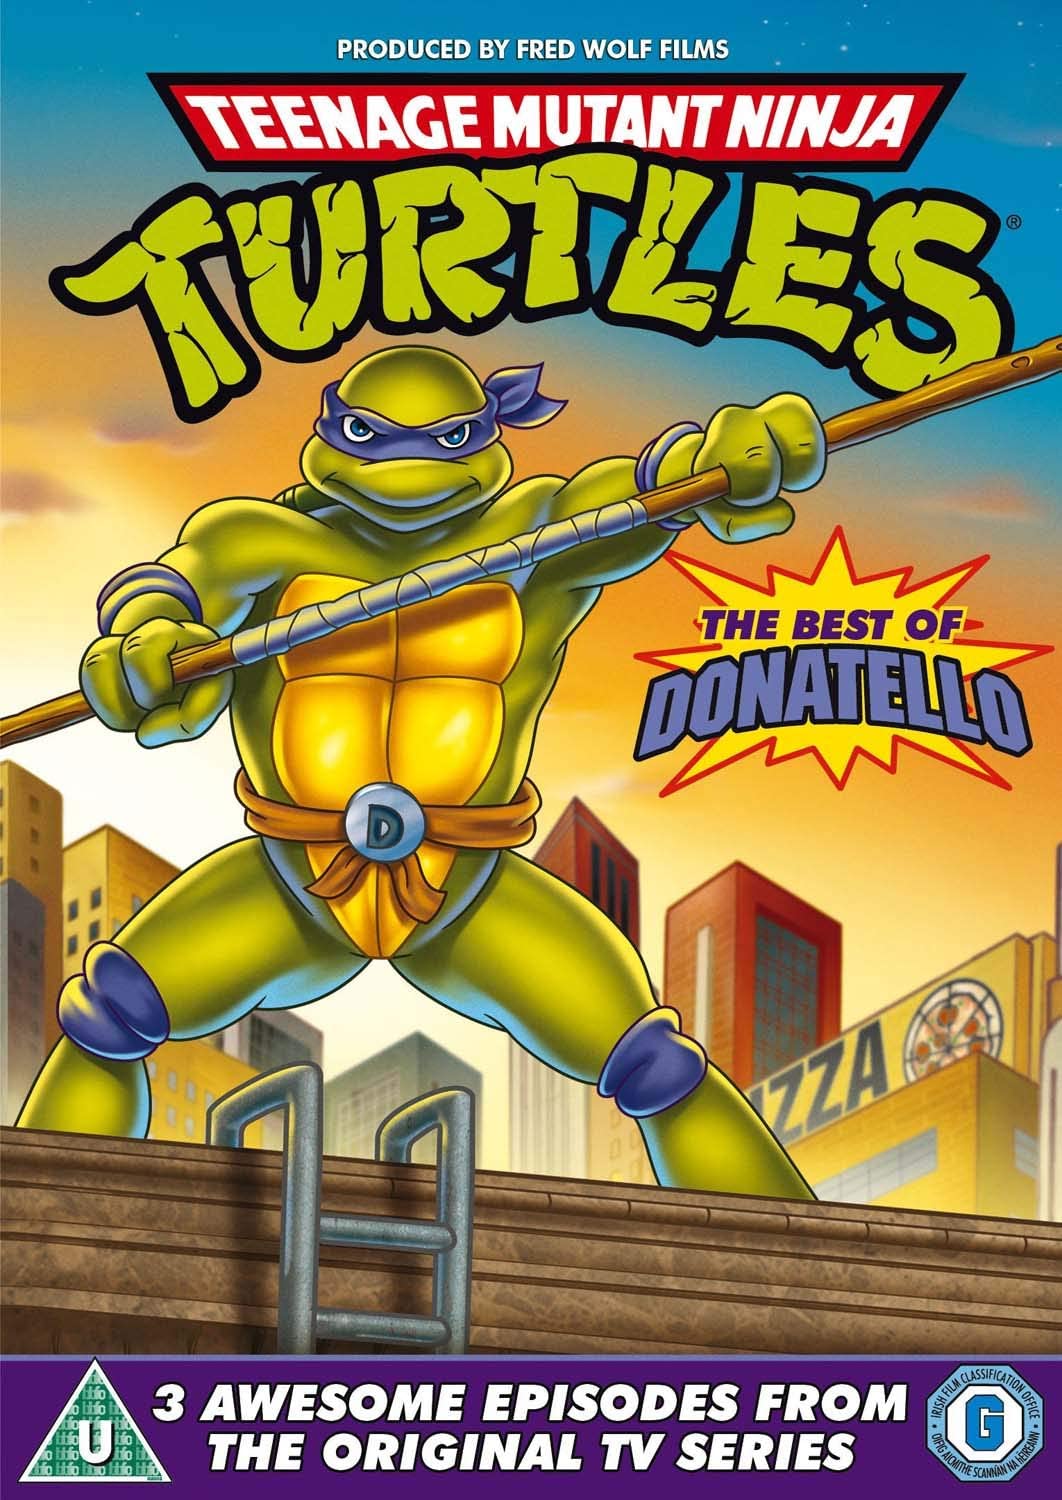 Teenage Mutant Ninja Turtles: Best Of Donatello [2017] - Action/Sci-fi [DVD]